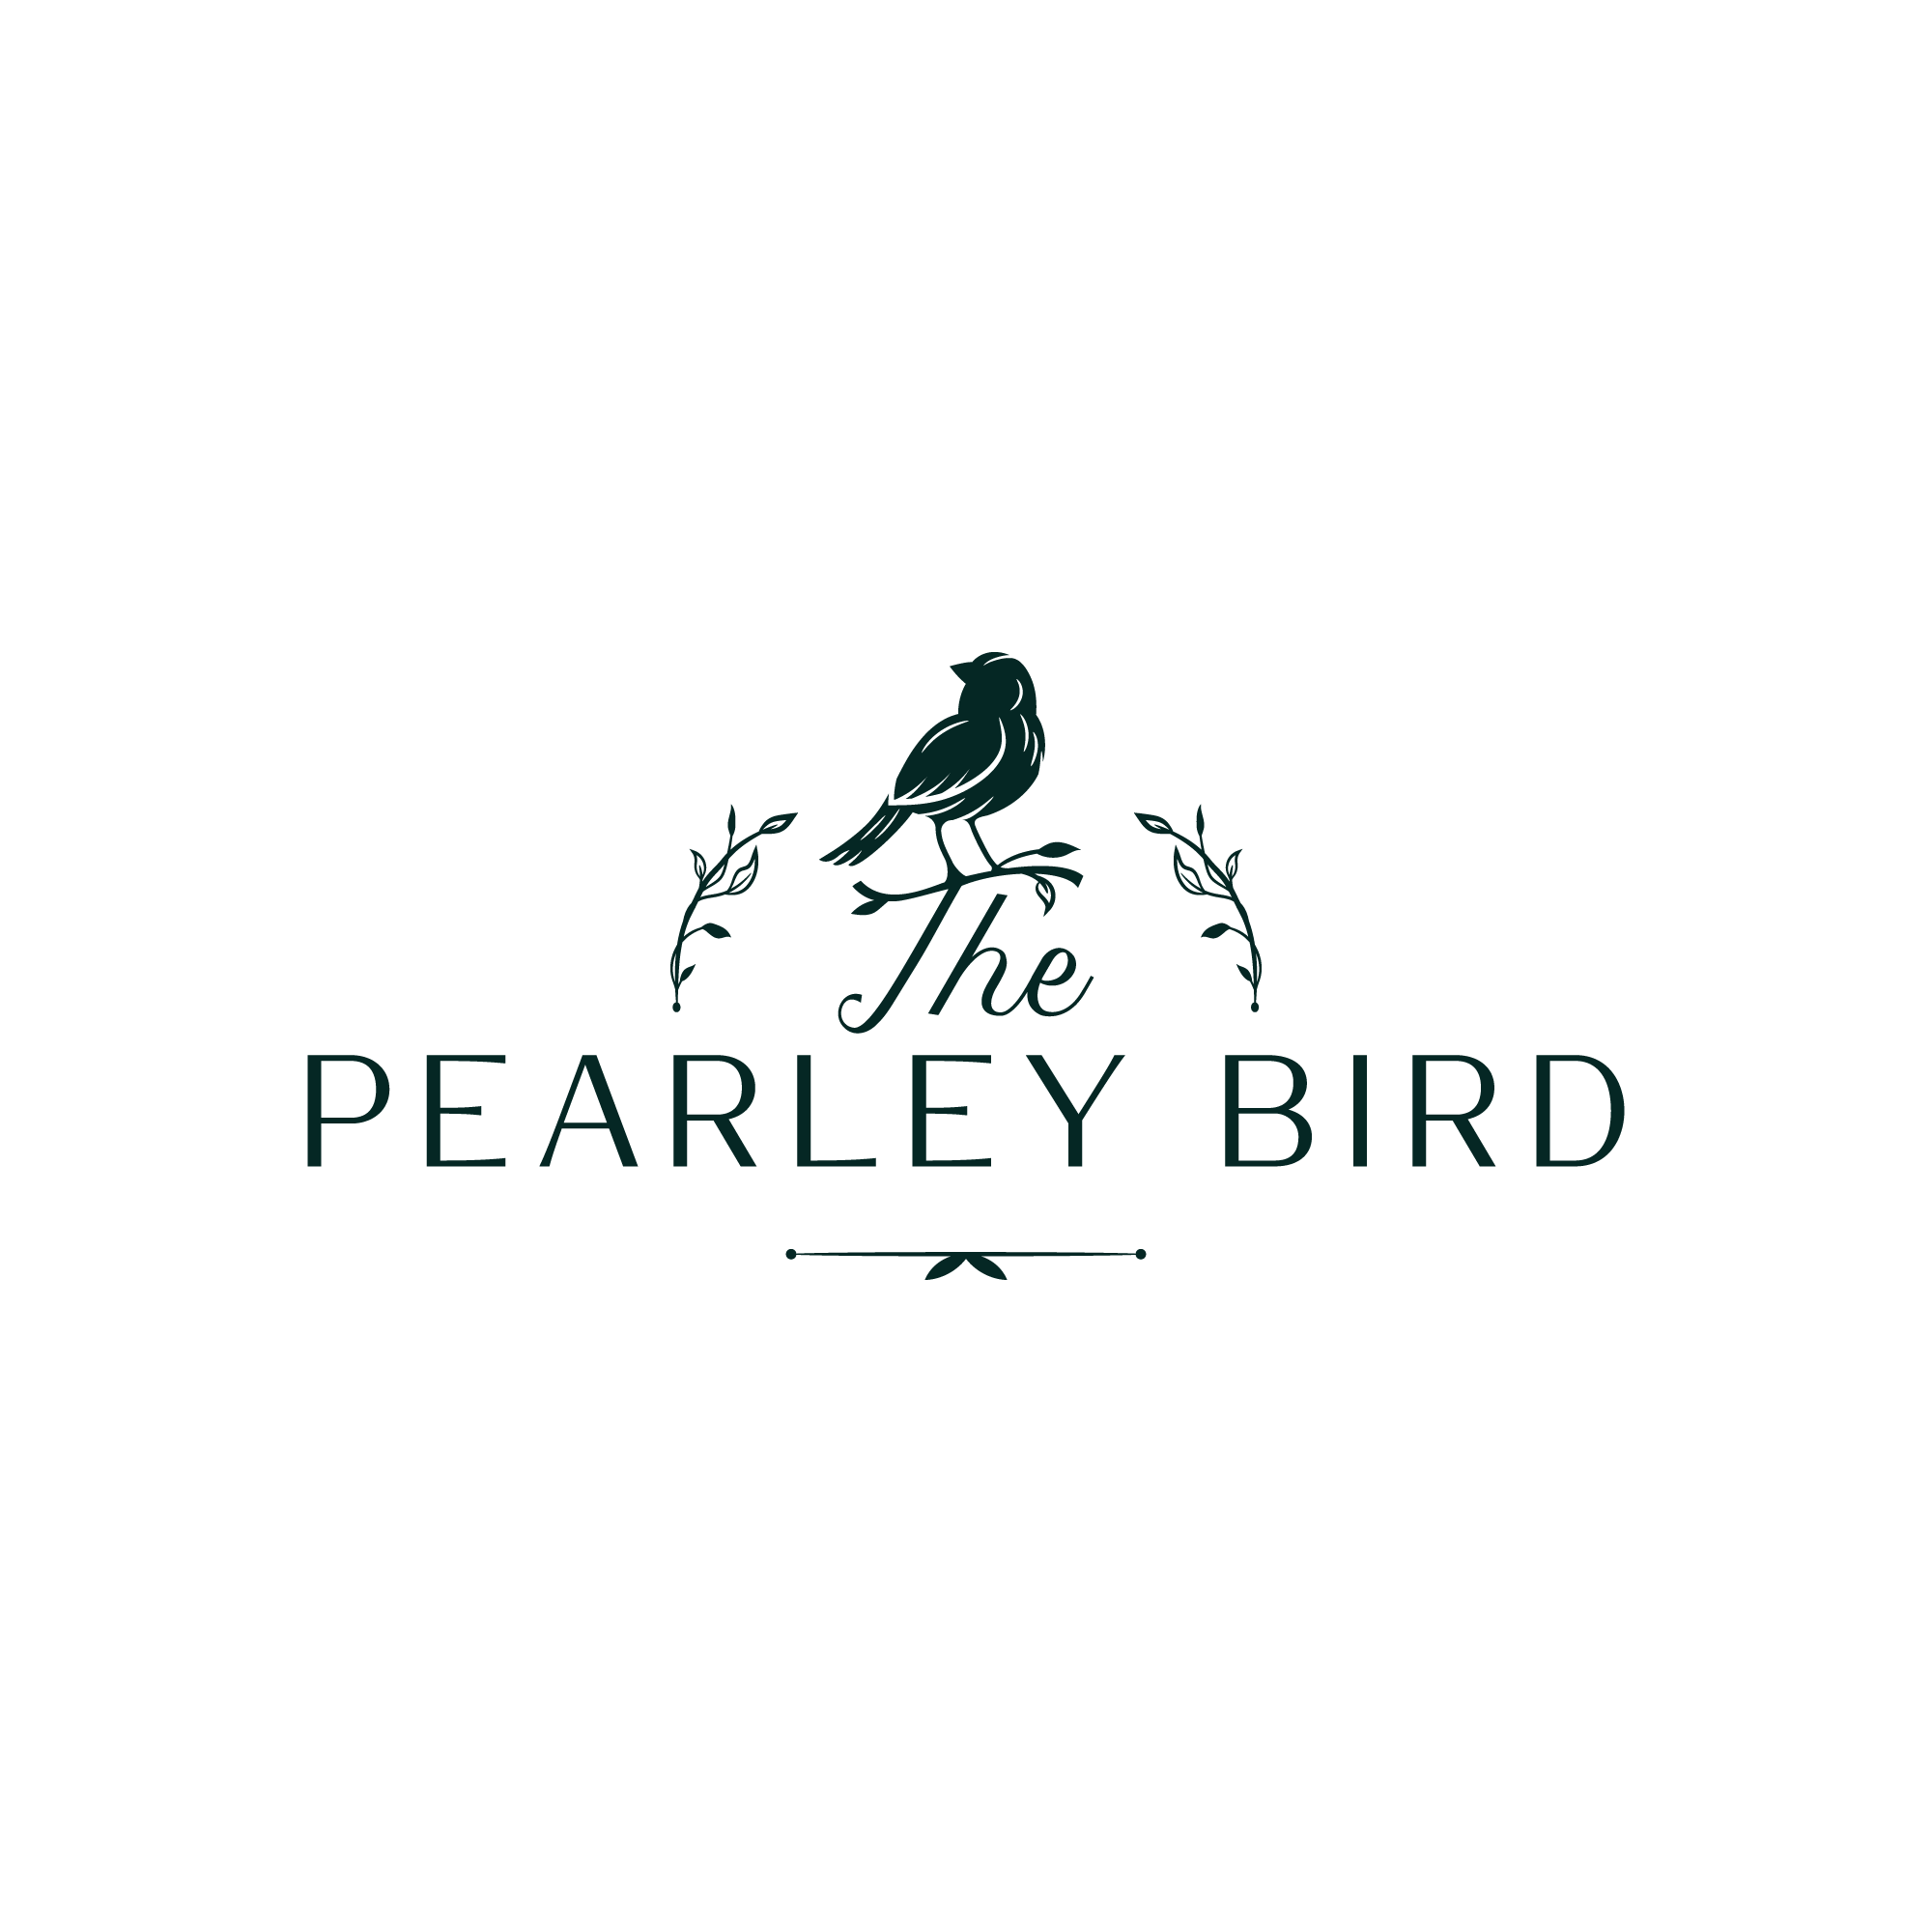 The-Pearley-Bird-Green-TranspBg